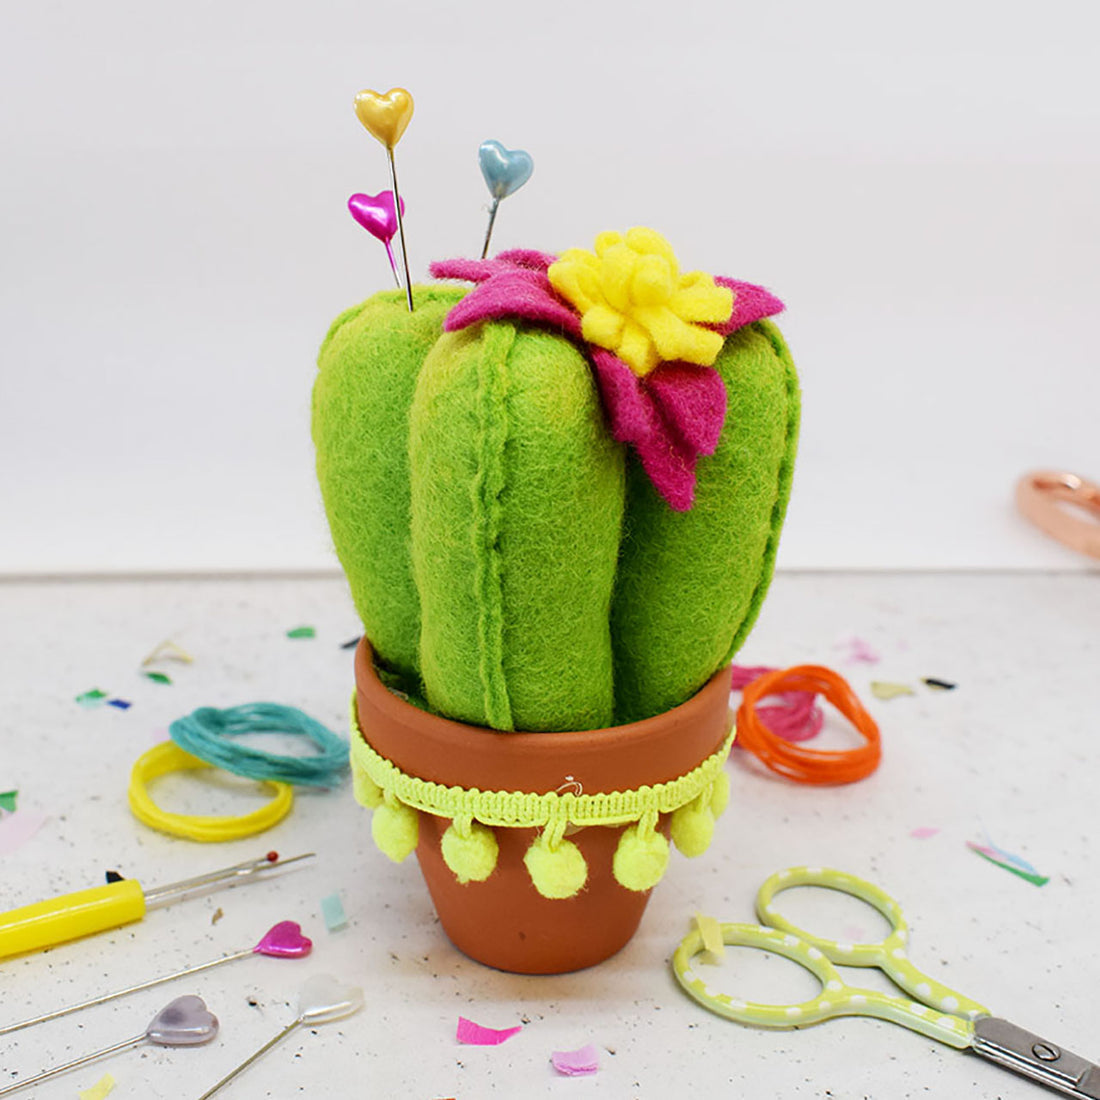 The Make Arcade ‘Cactus’ Felt Sewing Kit